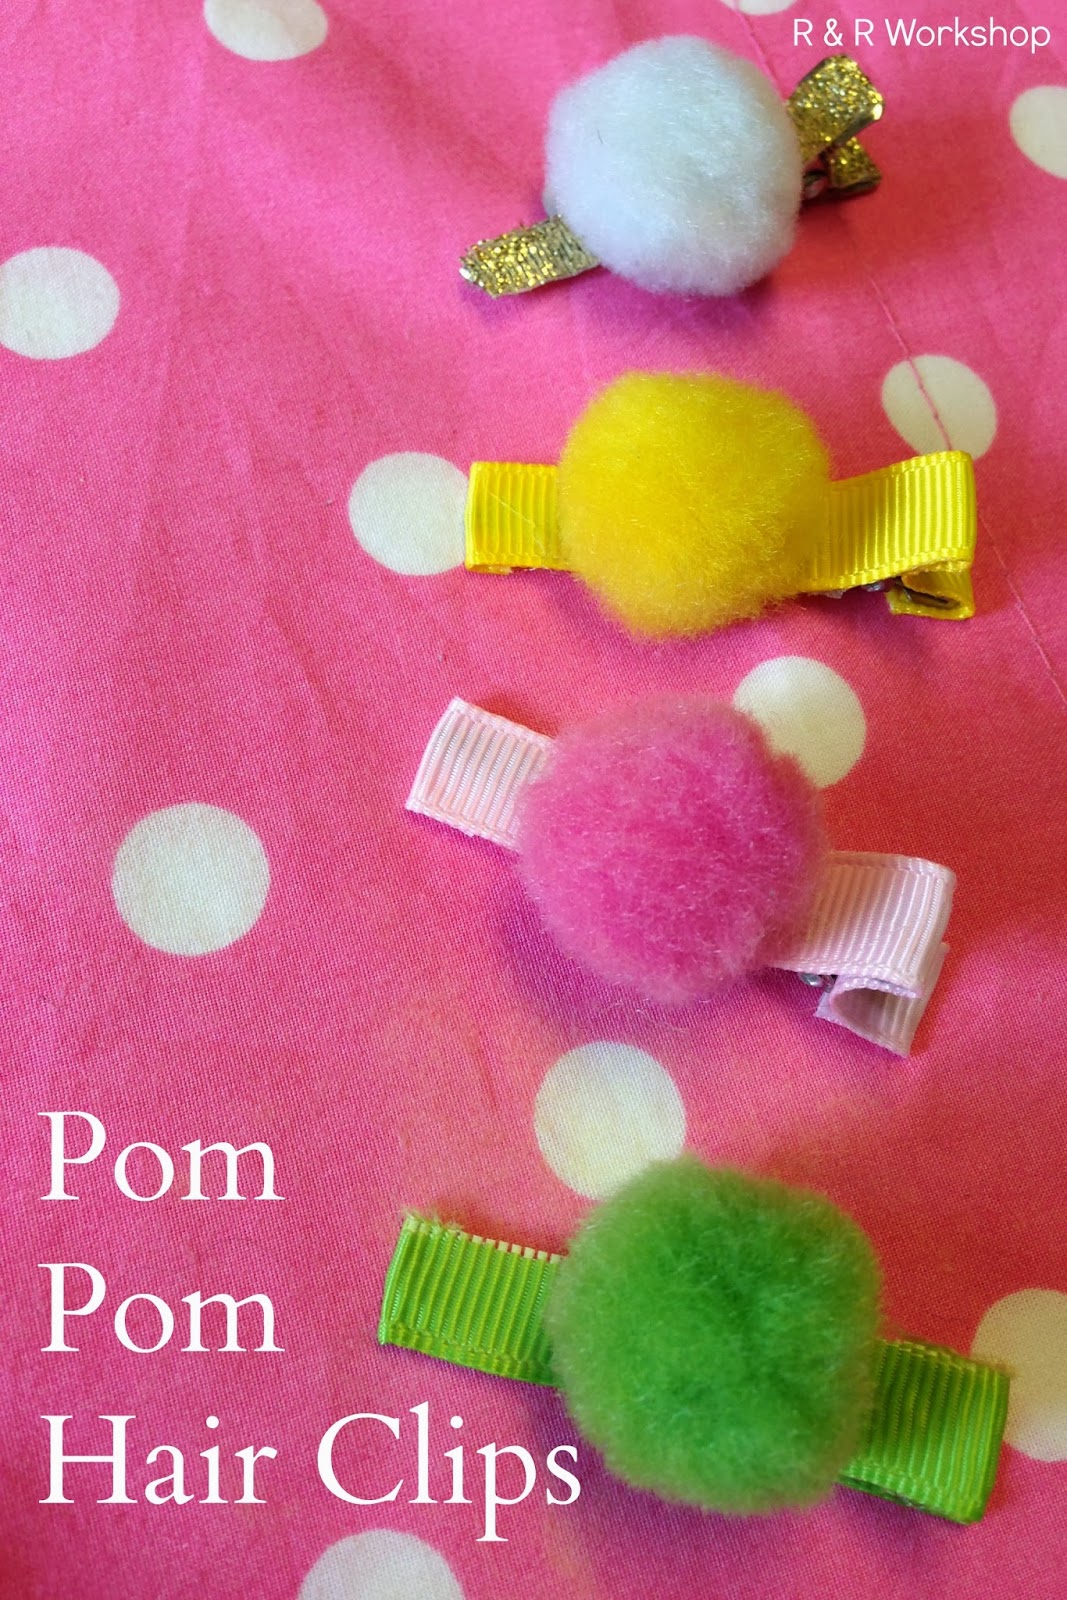 DIY Pom Pom Hair Clips from R&R - The Cards